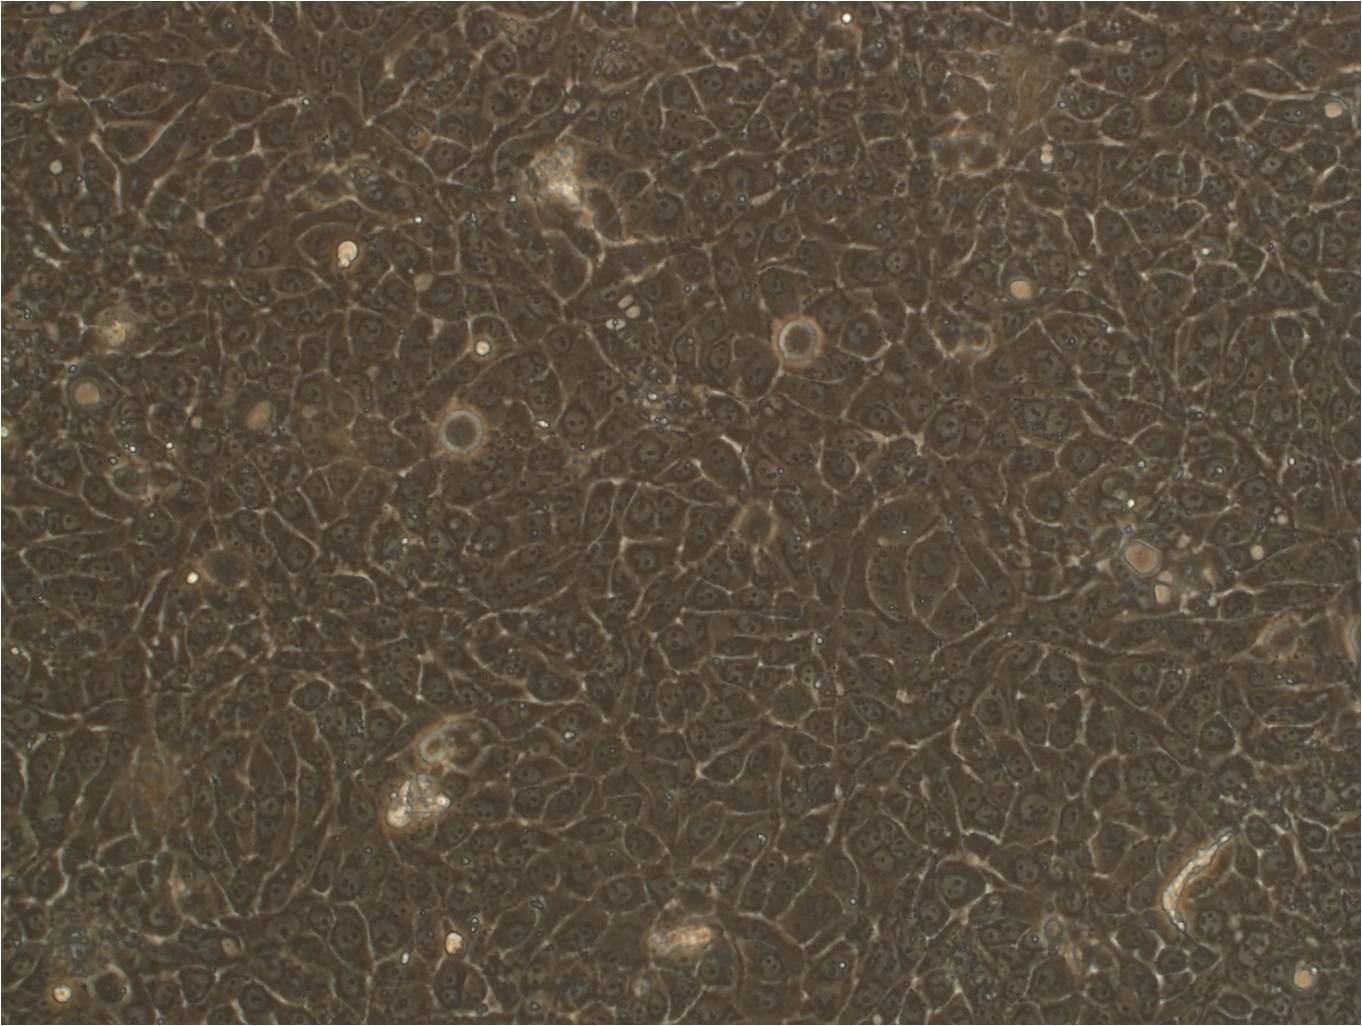 OCM-1A epithelioid cells人脉络膜黑色素瘤细胞系,OCM-1A epithelioid cells